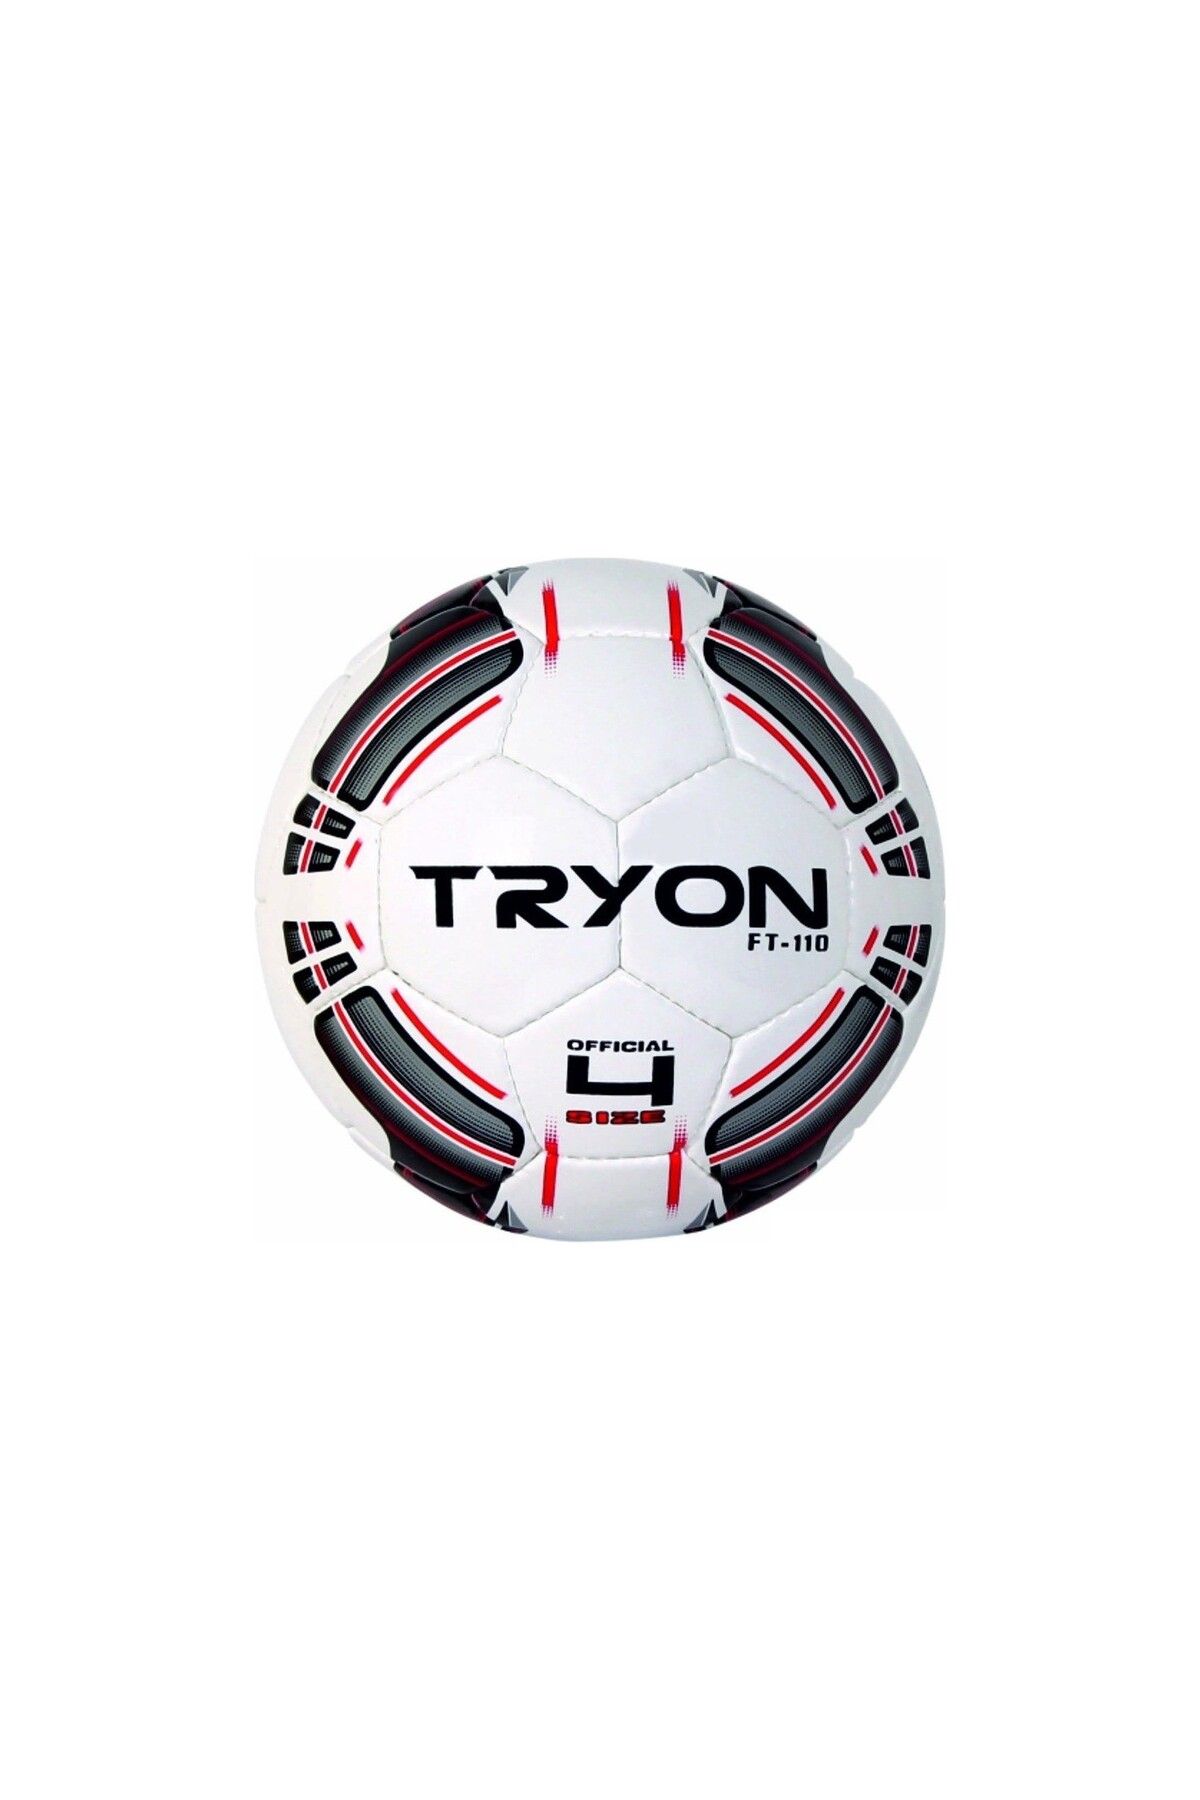 TRYON Futbol Topu FT-110 4 Numara Çim-Halı Saha